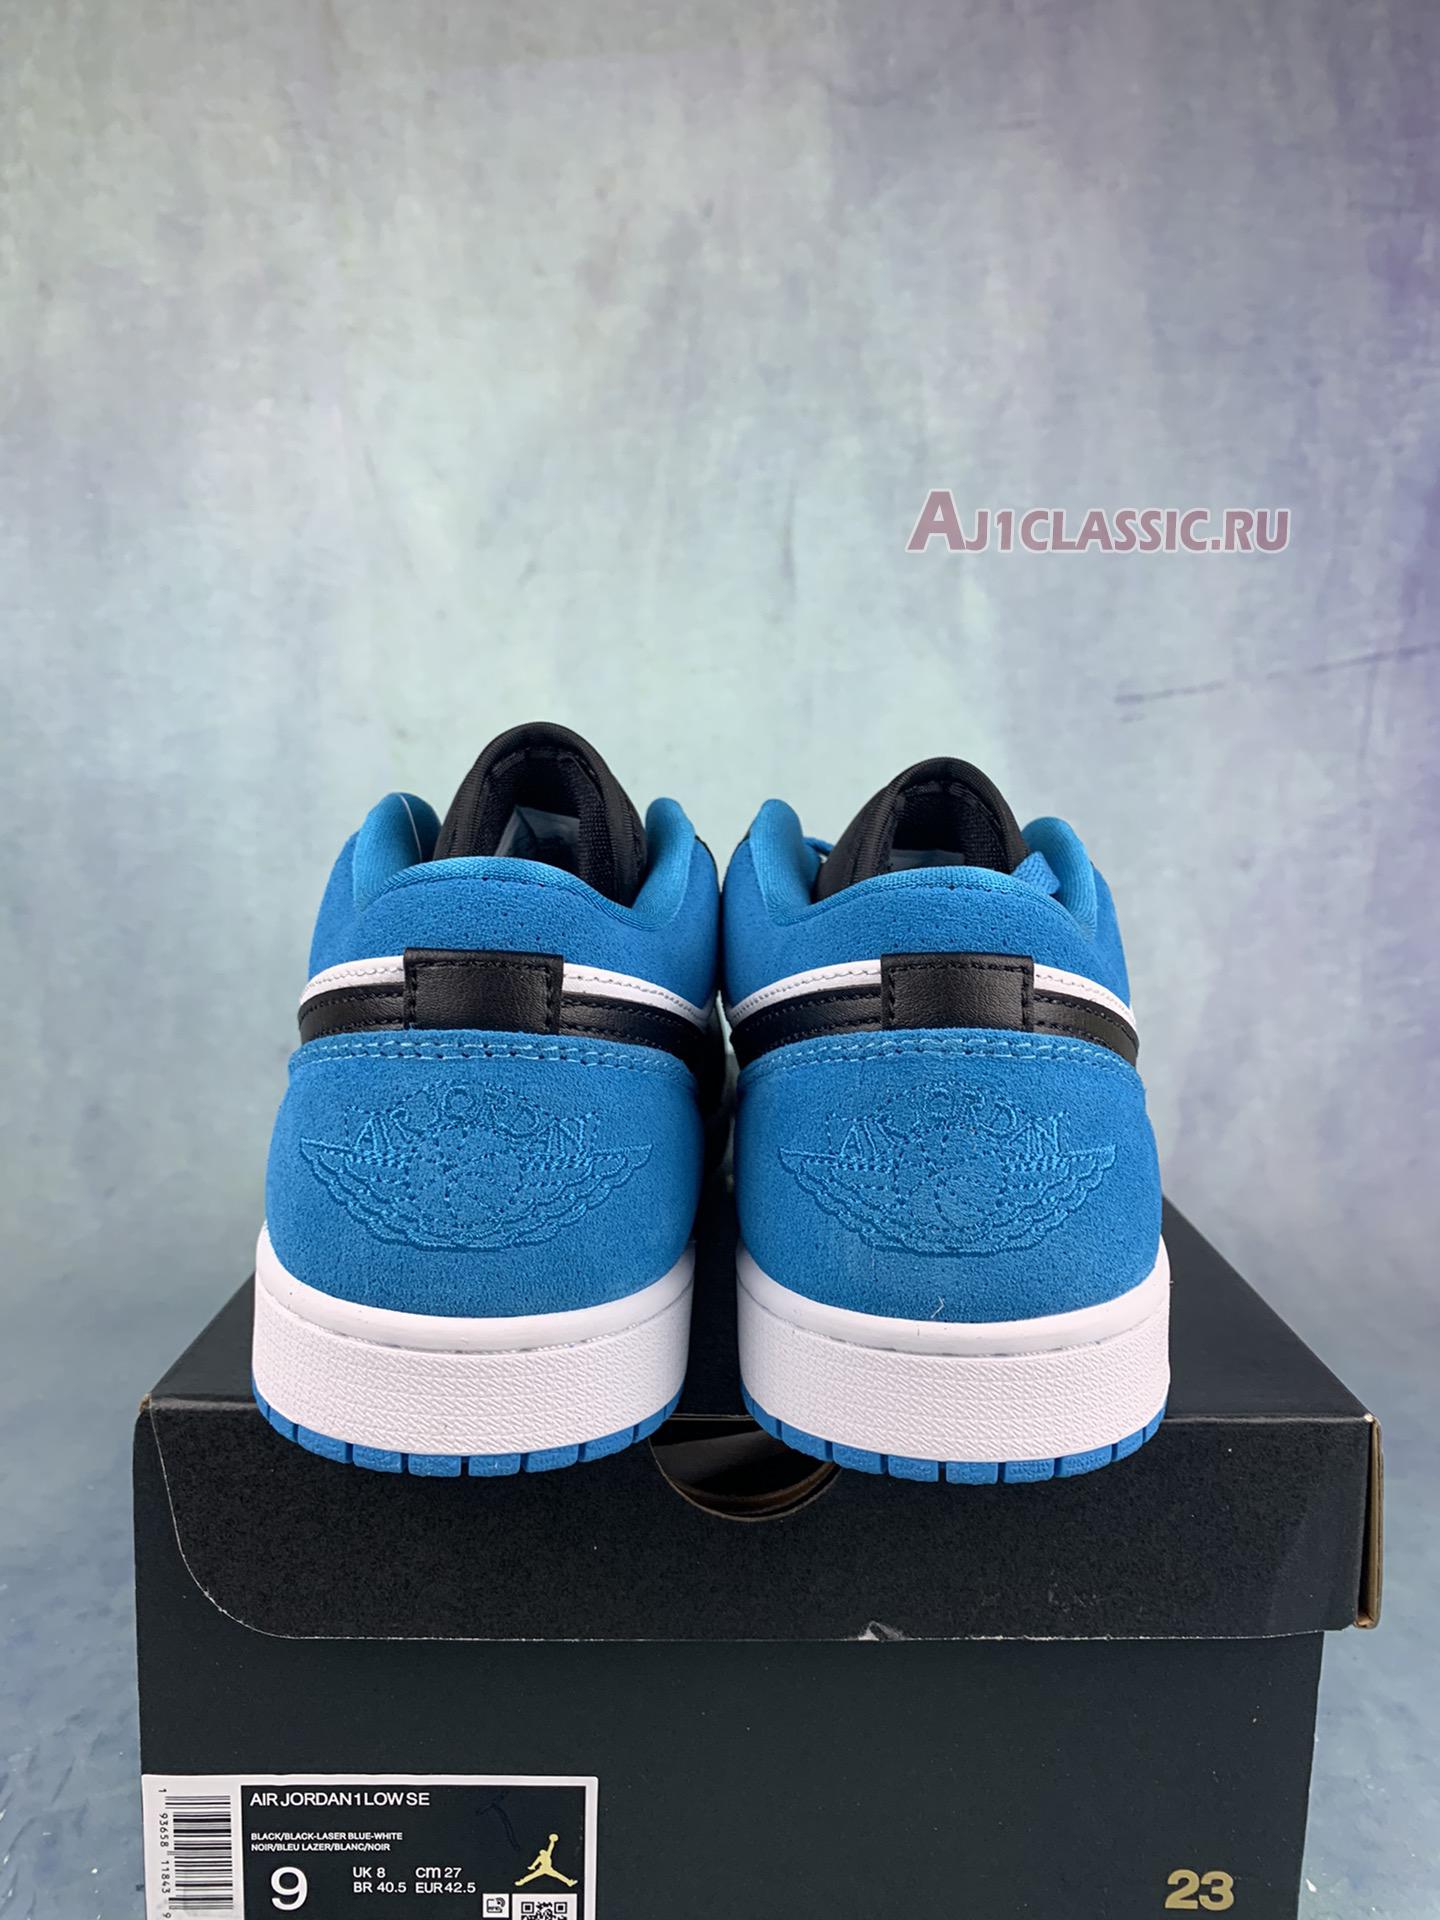 Air Jordan 1 Low SE "Laser Blue" CK3022-004-2